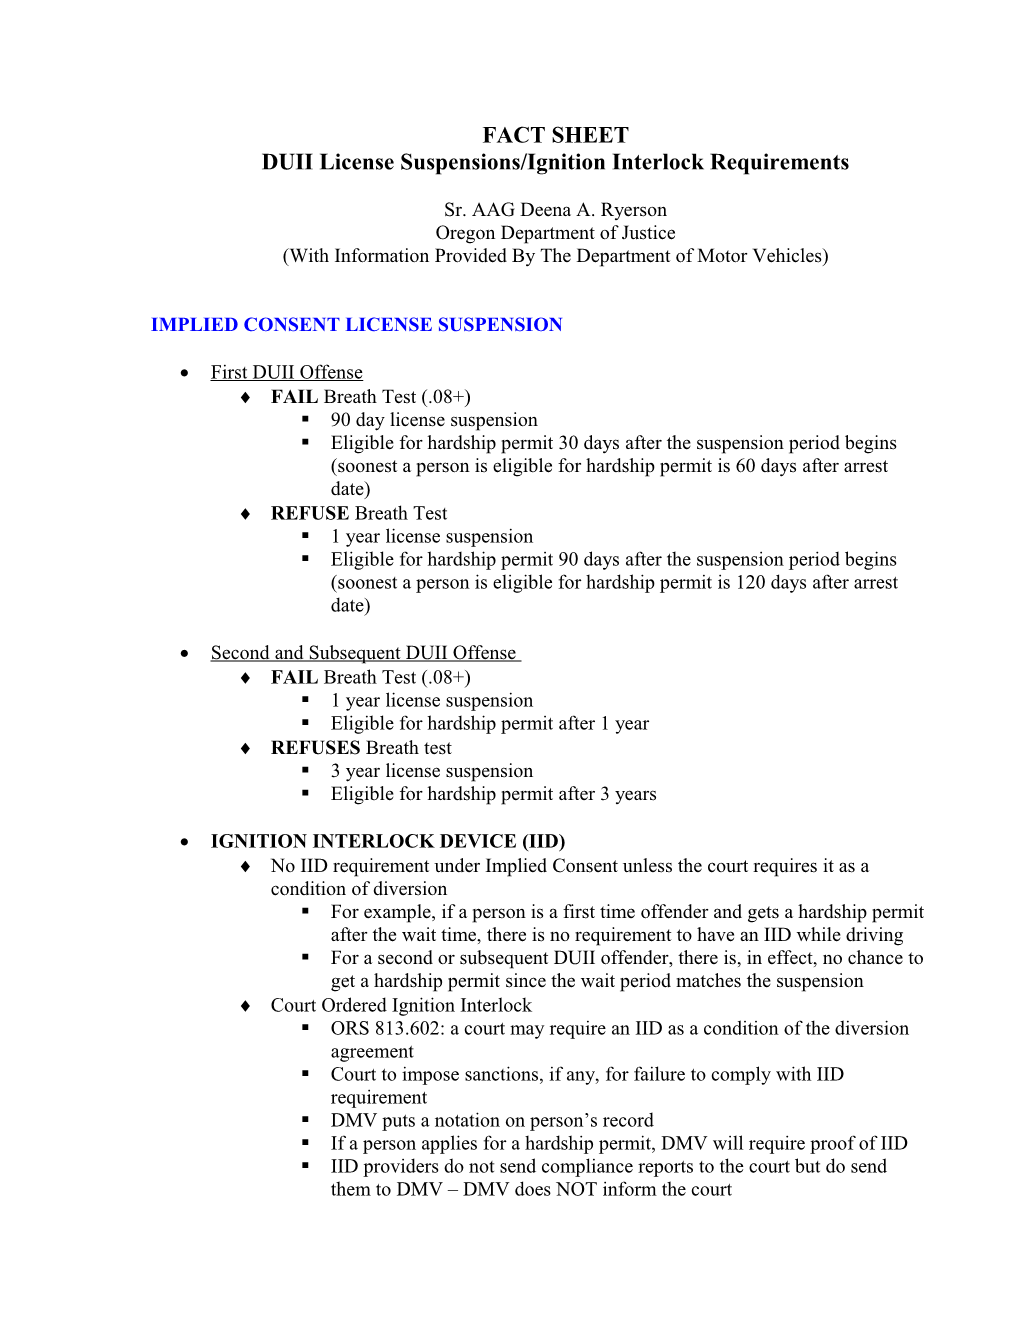 DUII License Suspensions/Ignition Interlock Requirements